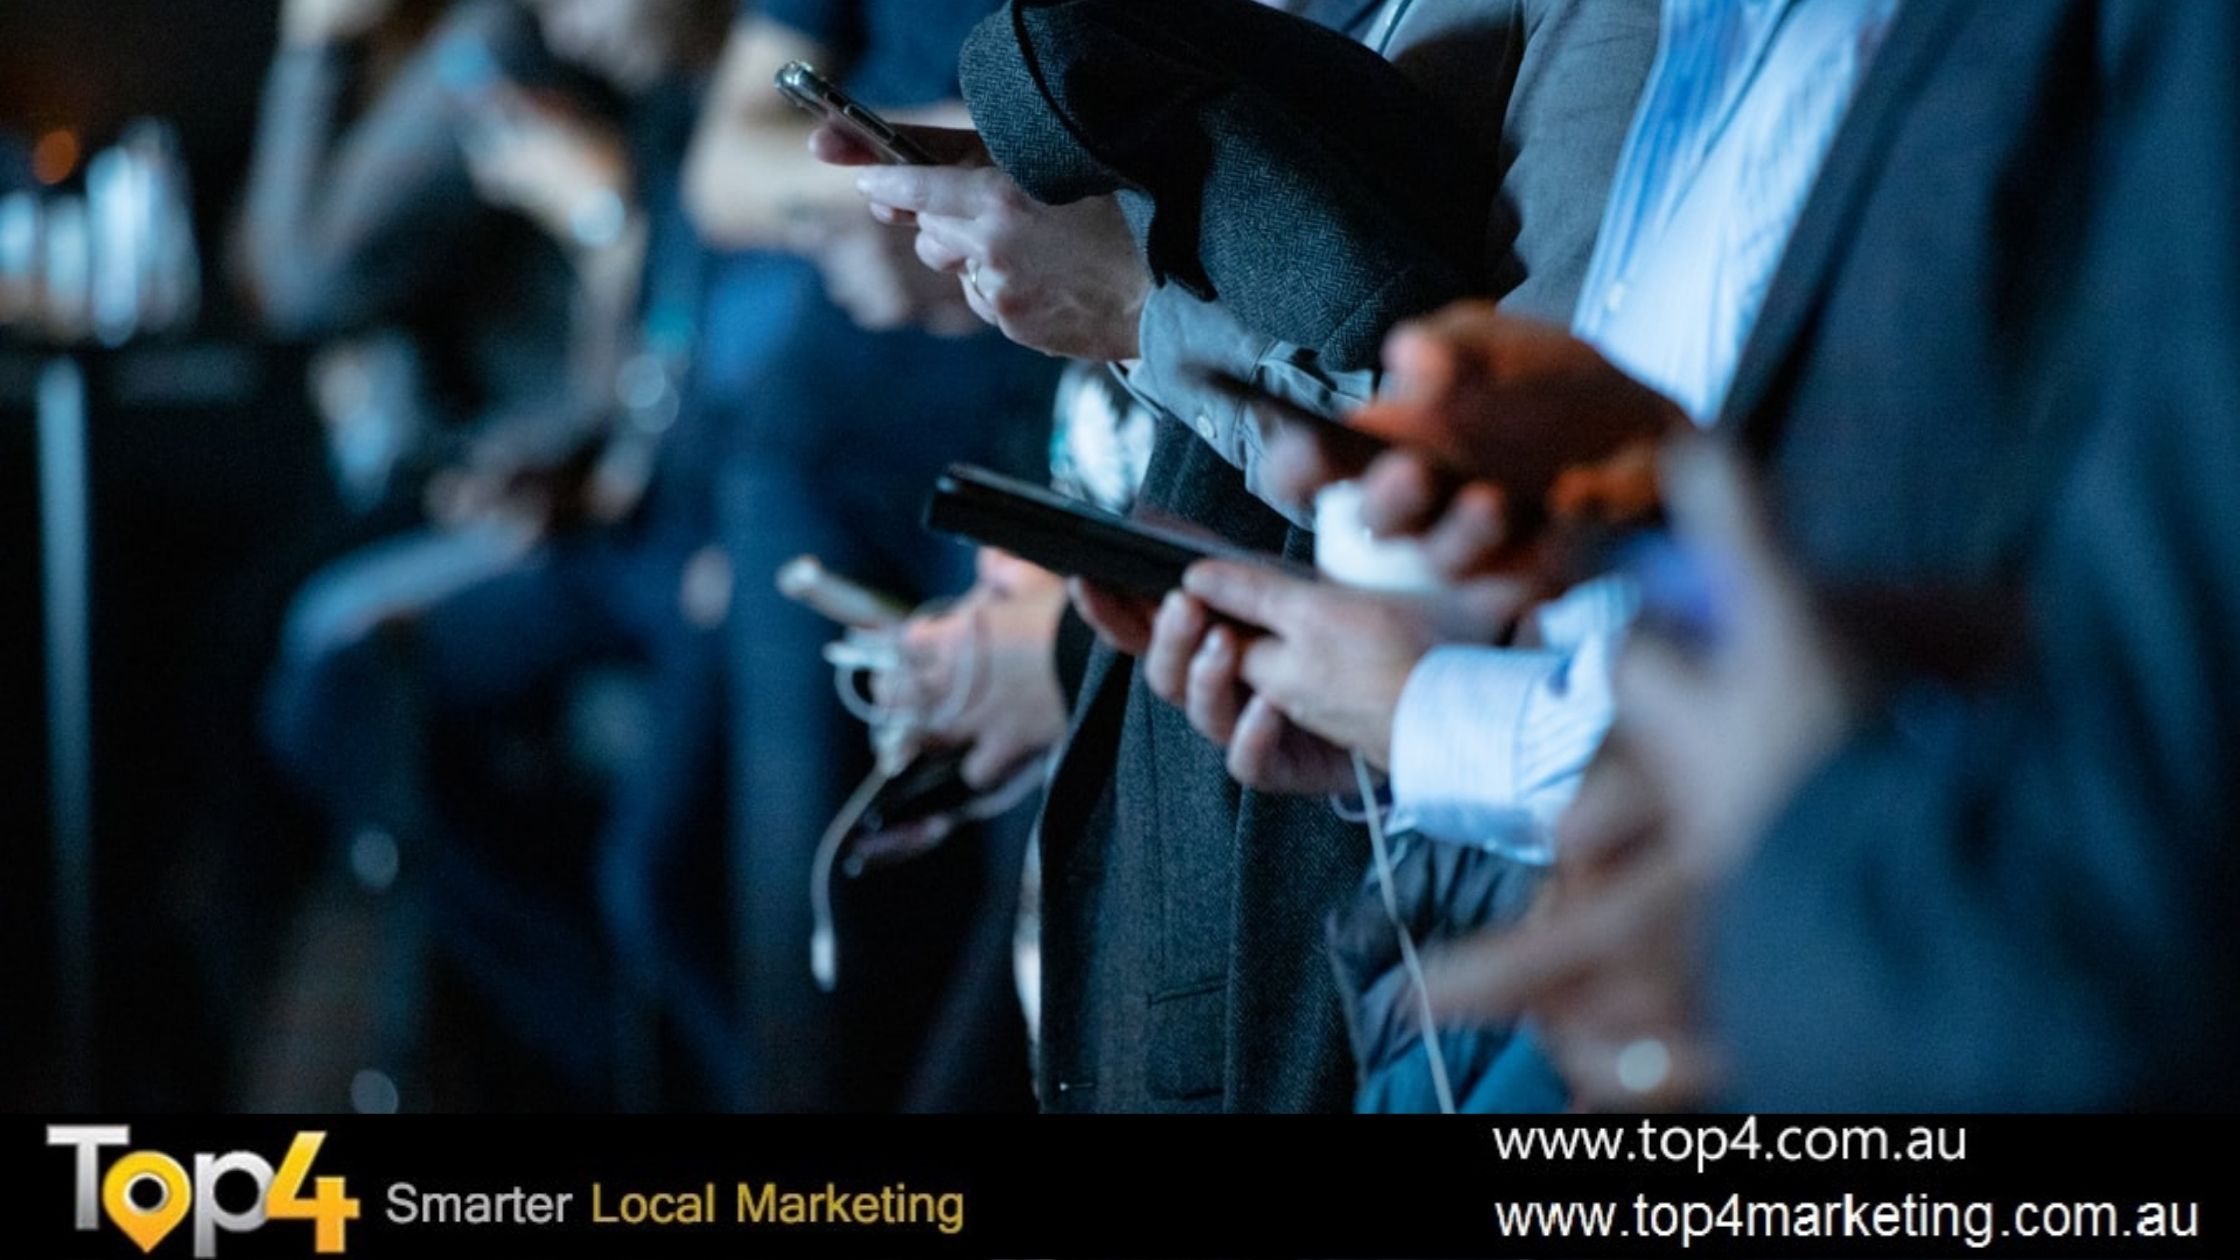 Small Business Digital Marketing - Top4 Marketing